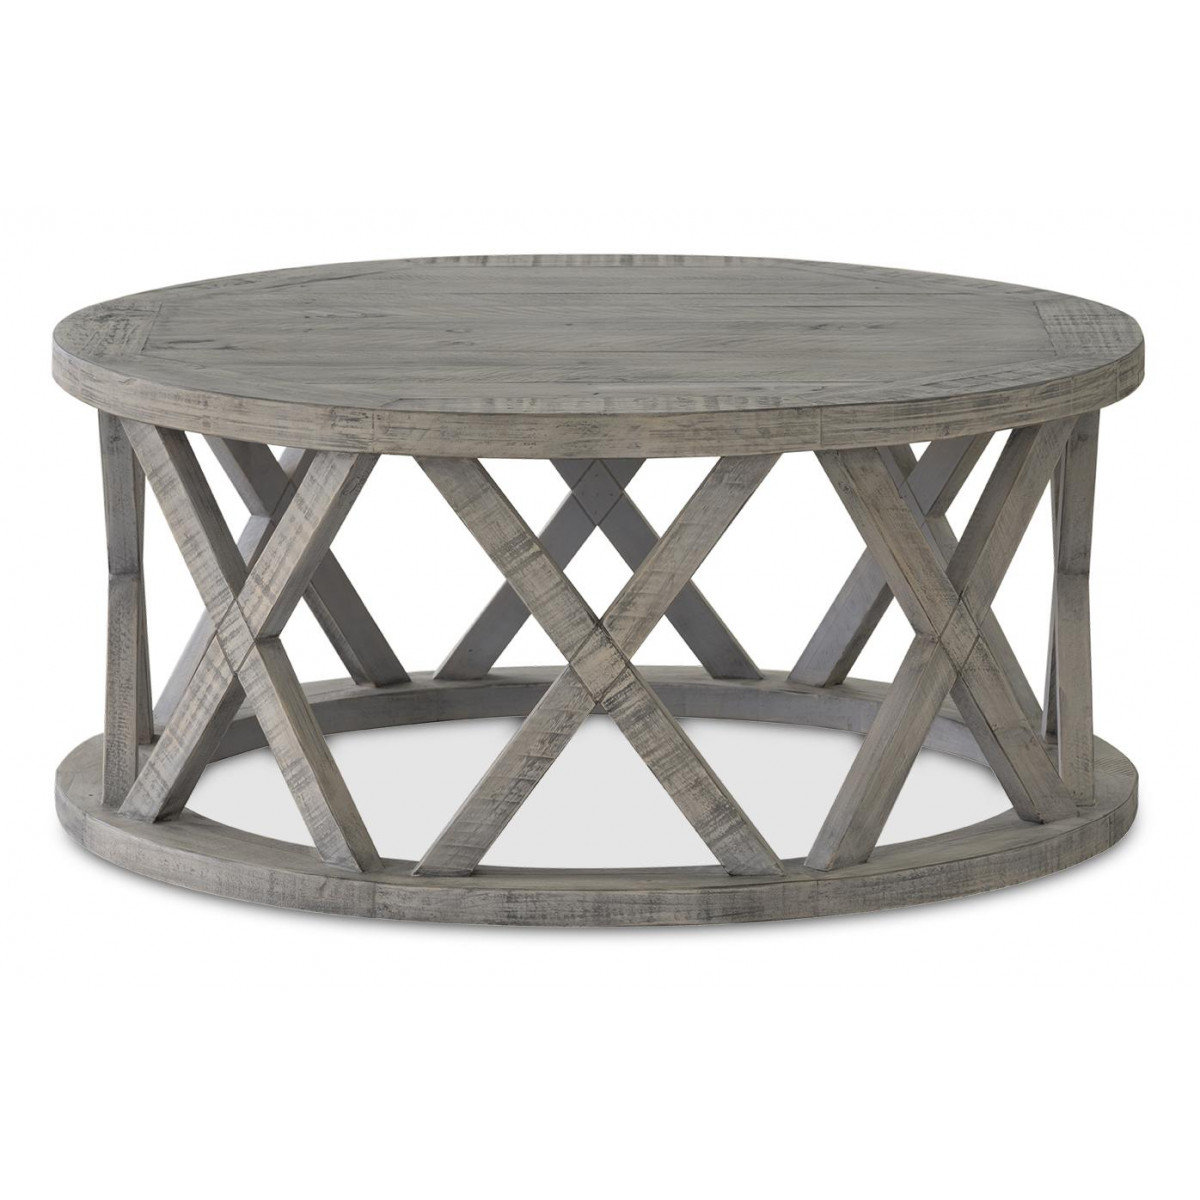 Table basse bois blanc 100x100x45cm